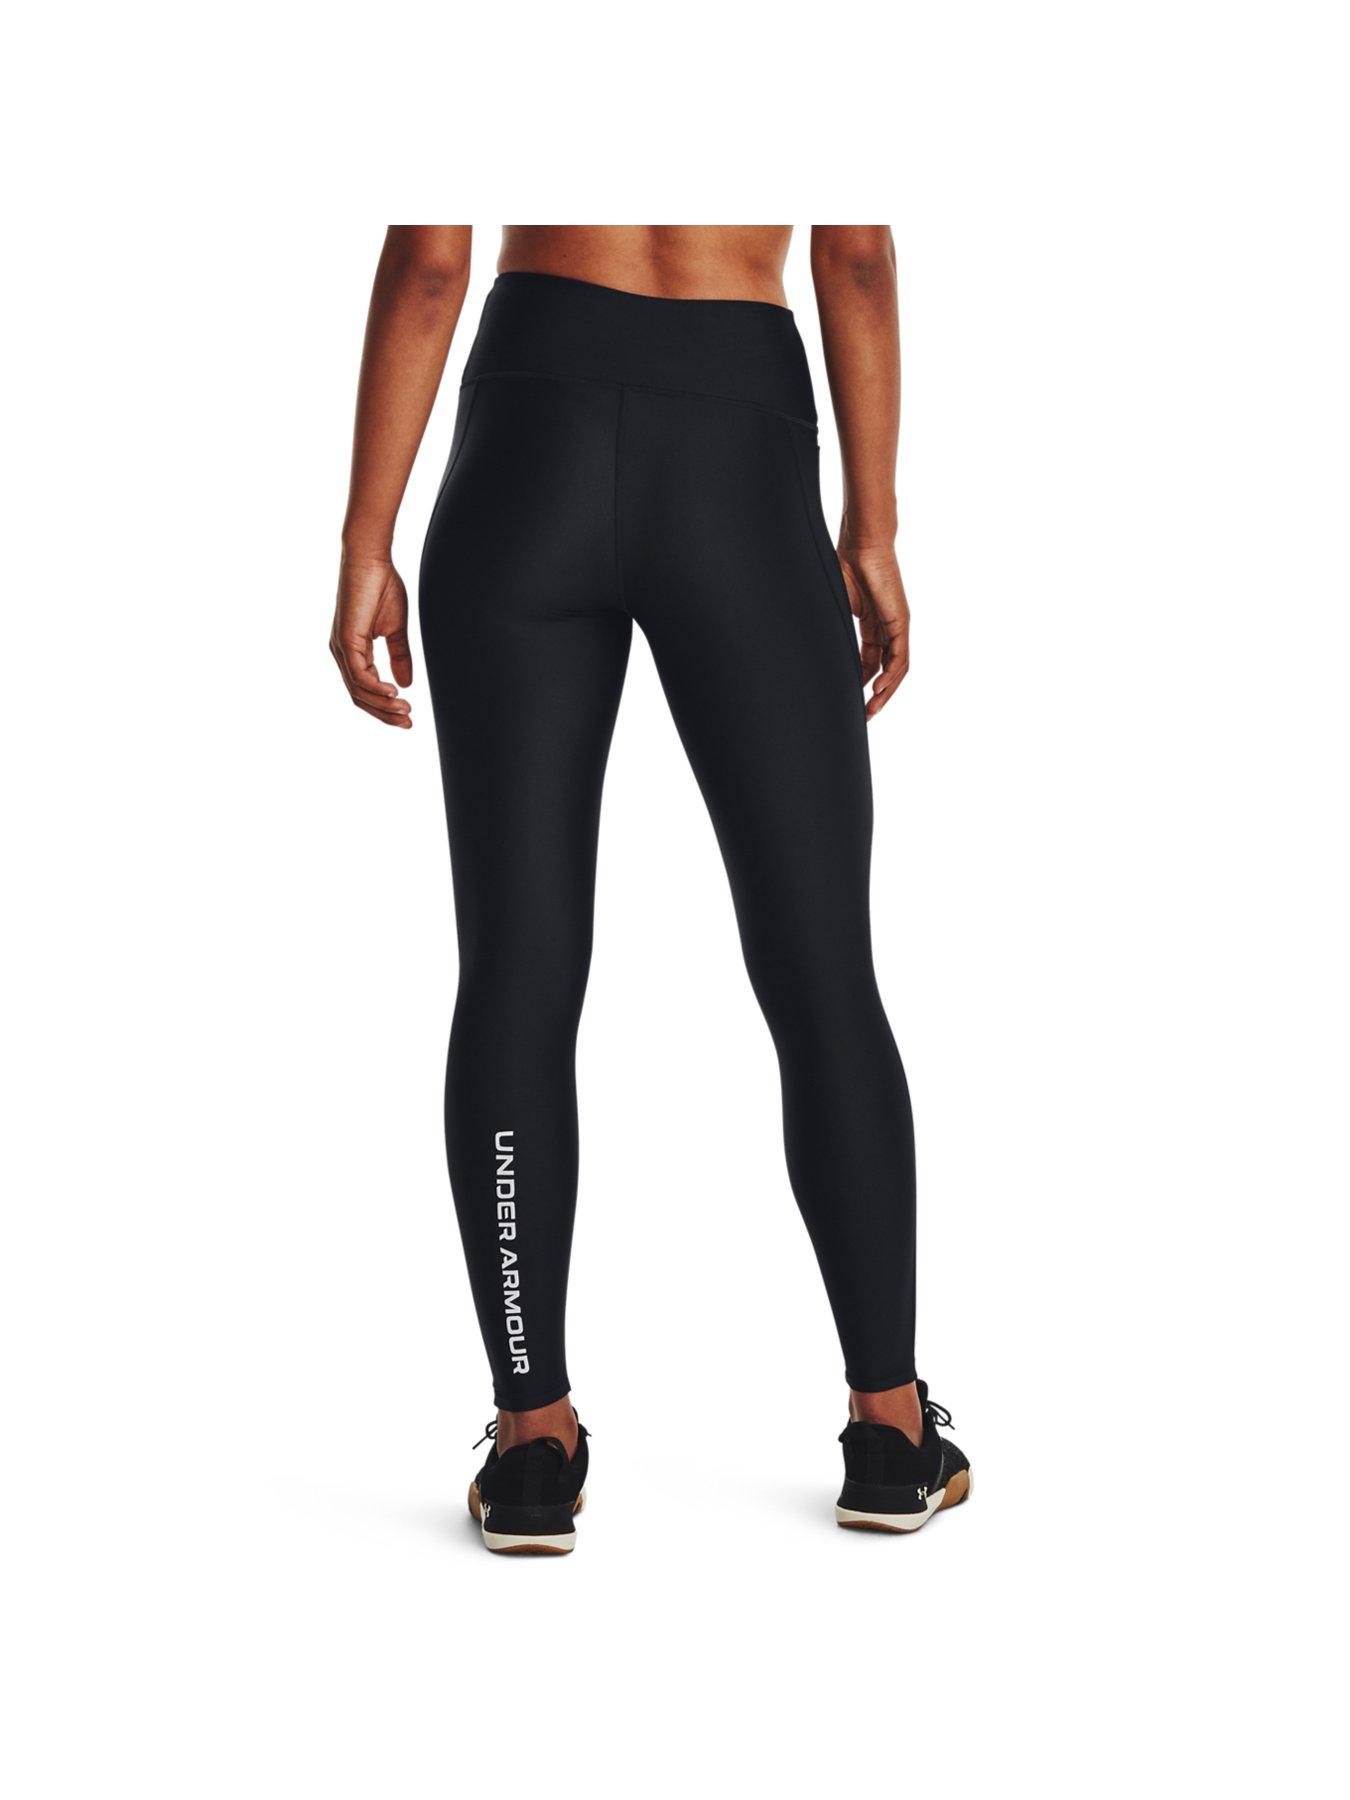 UNDER ARMOUR Womens Training Heat Gear Authentics Legging - Black/White